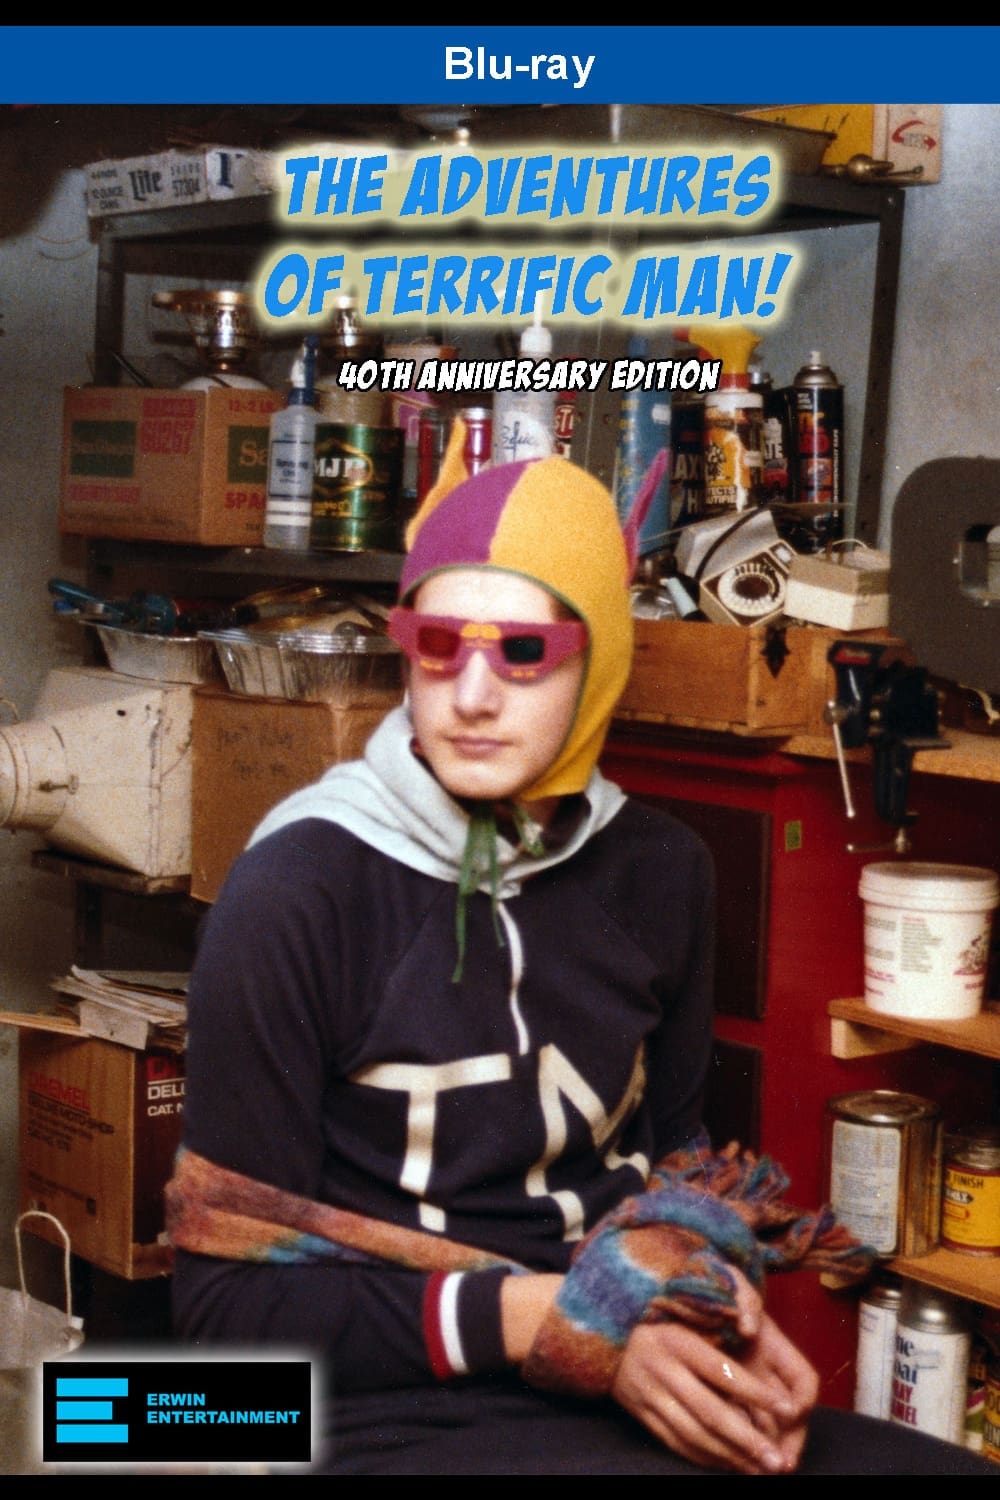 The Adventures of Terrific Man!